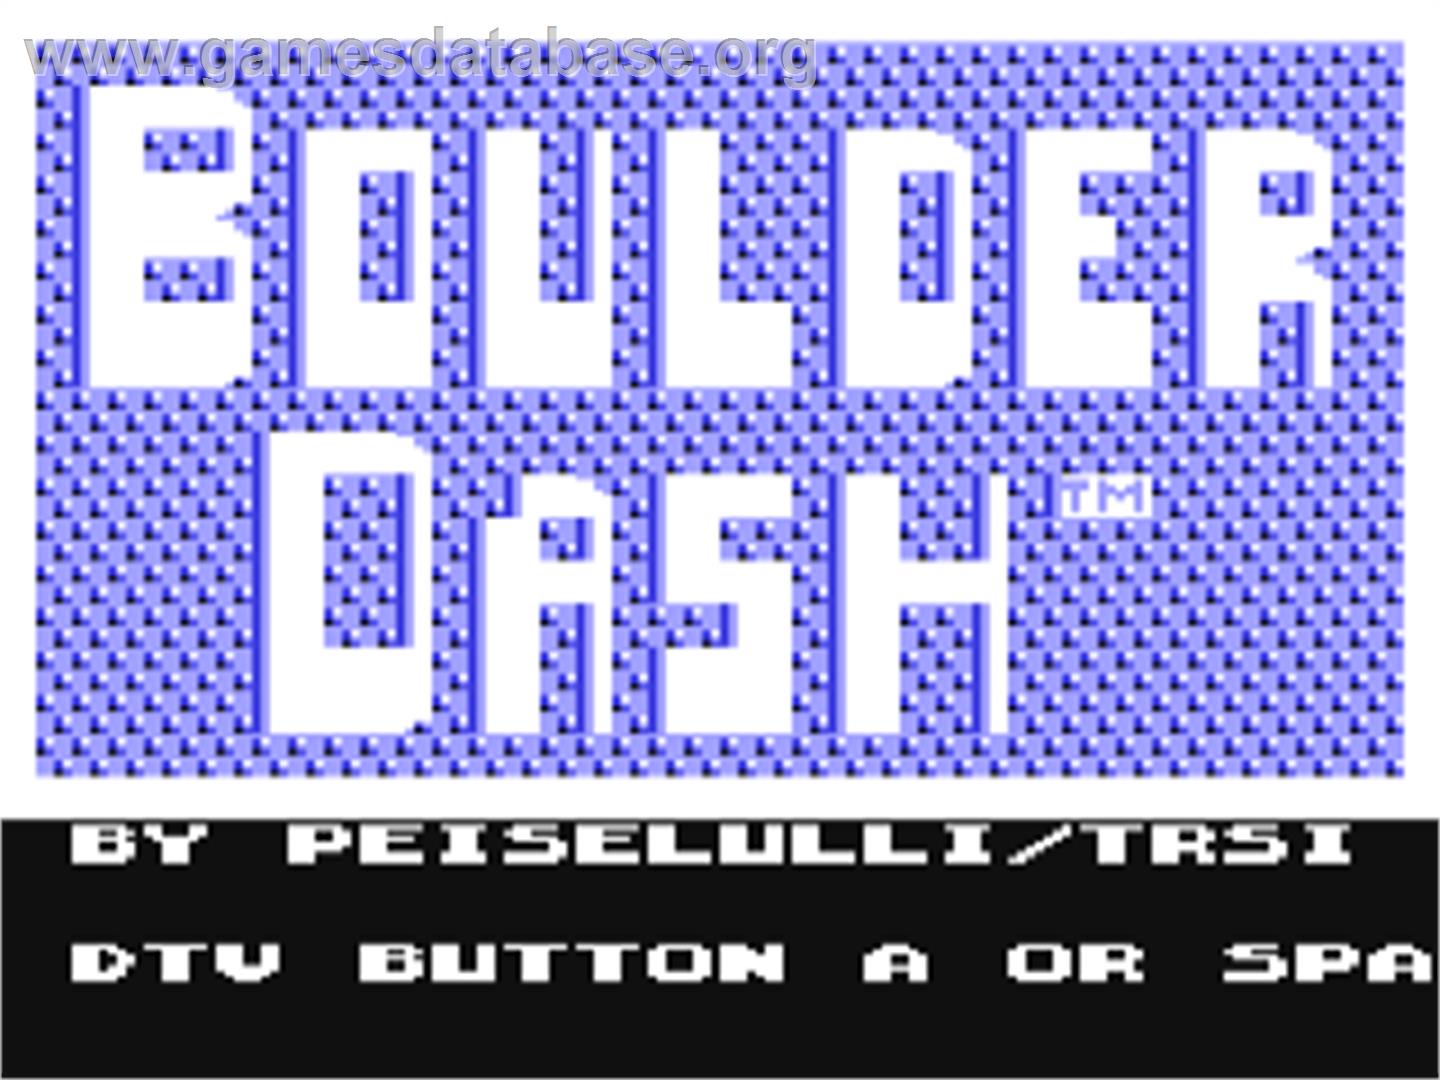 Boulder Dash Construction Kit - Commodore 64 - Artwork - Title Screen